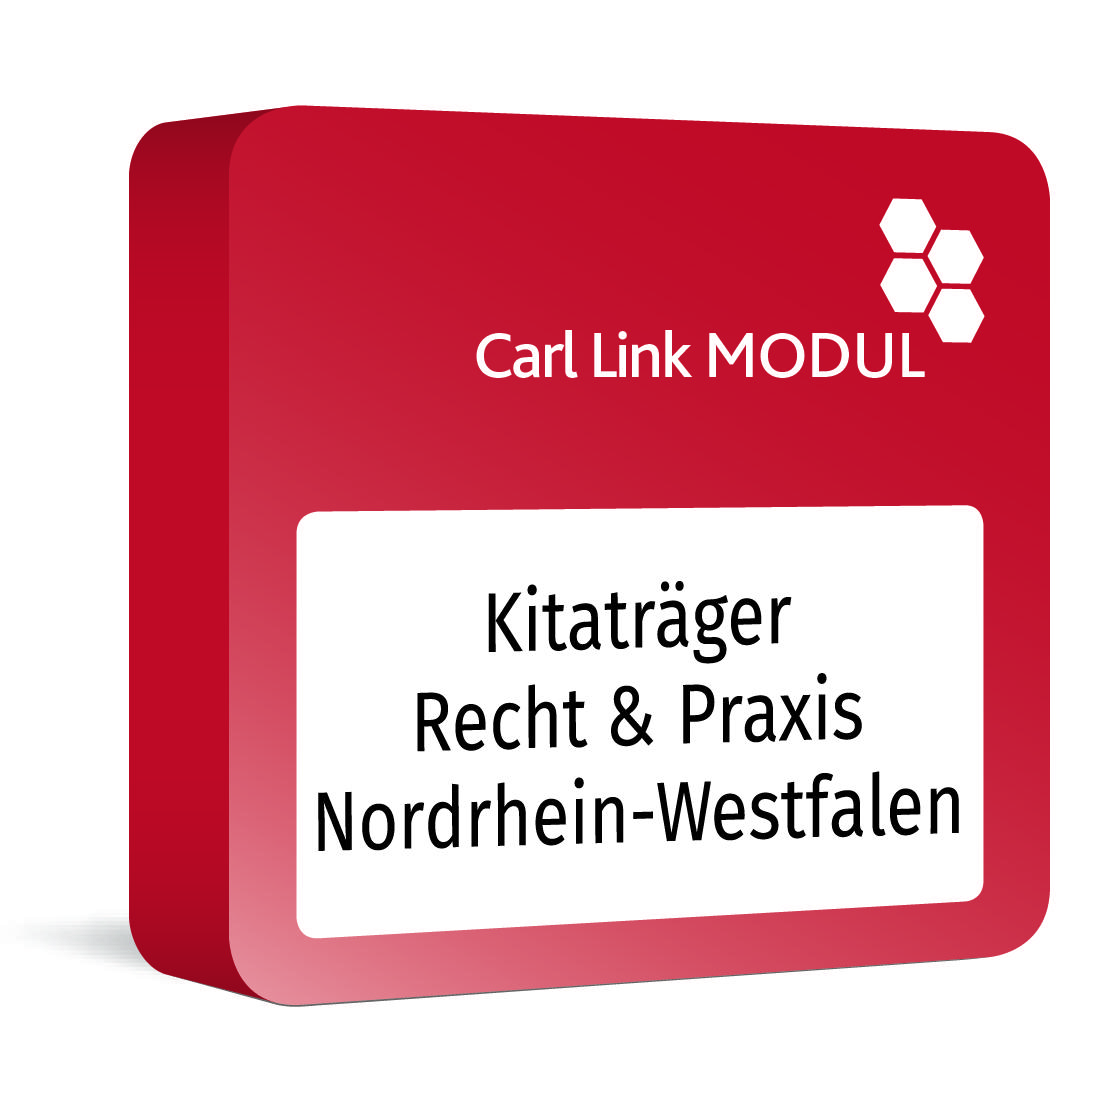 Carl Link Modul Kitaträger Nordrhein-Westfalen